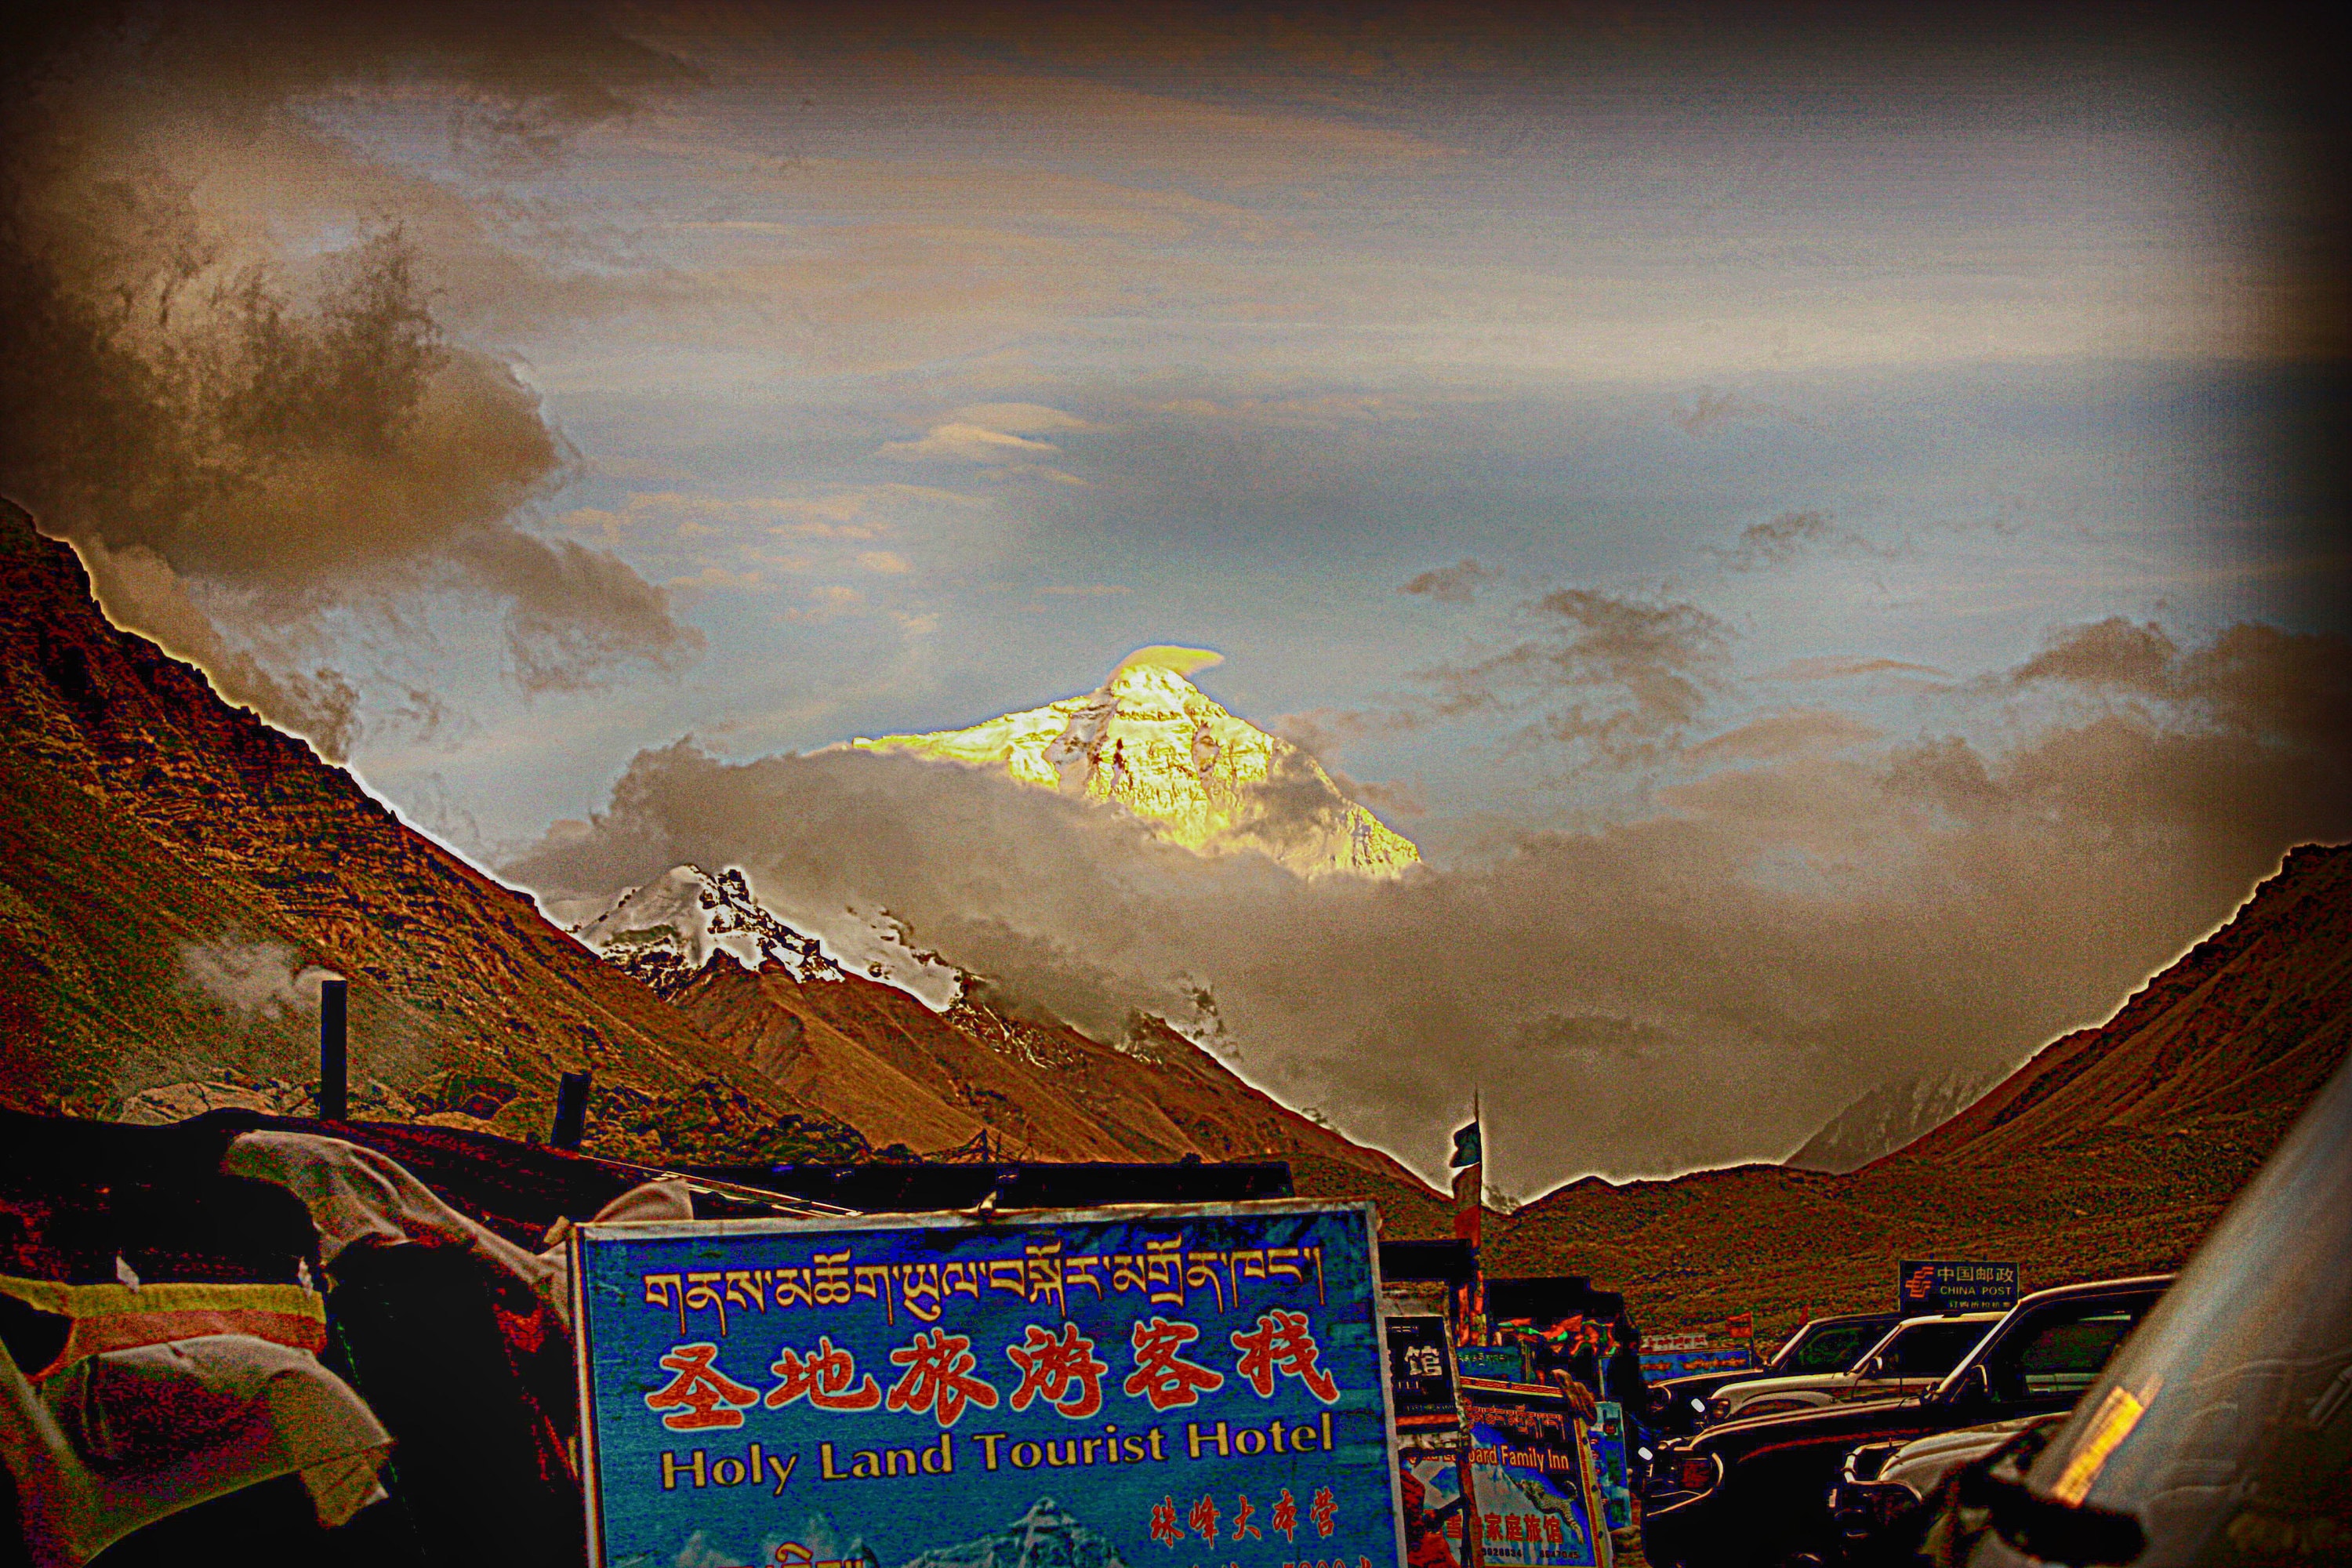 The sun setting over Mt Everest